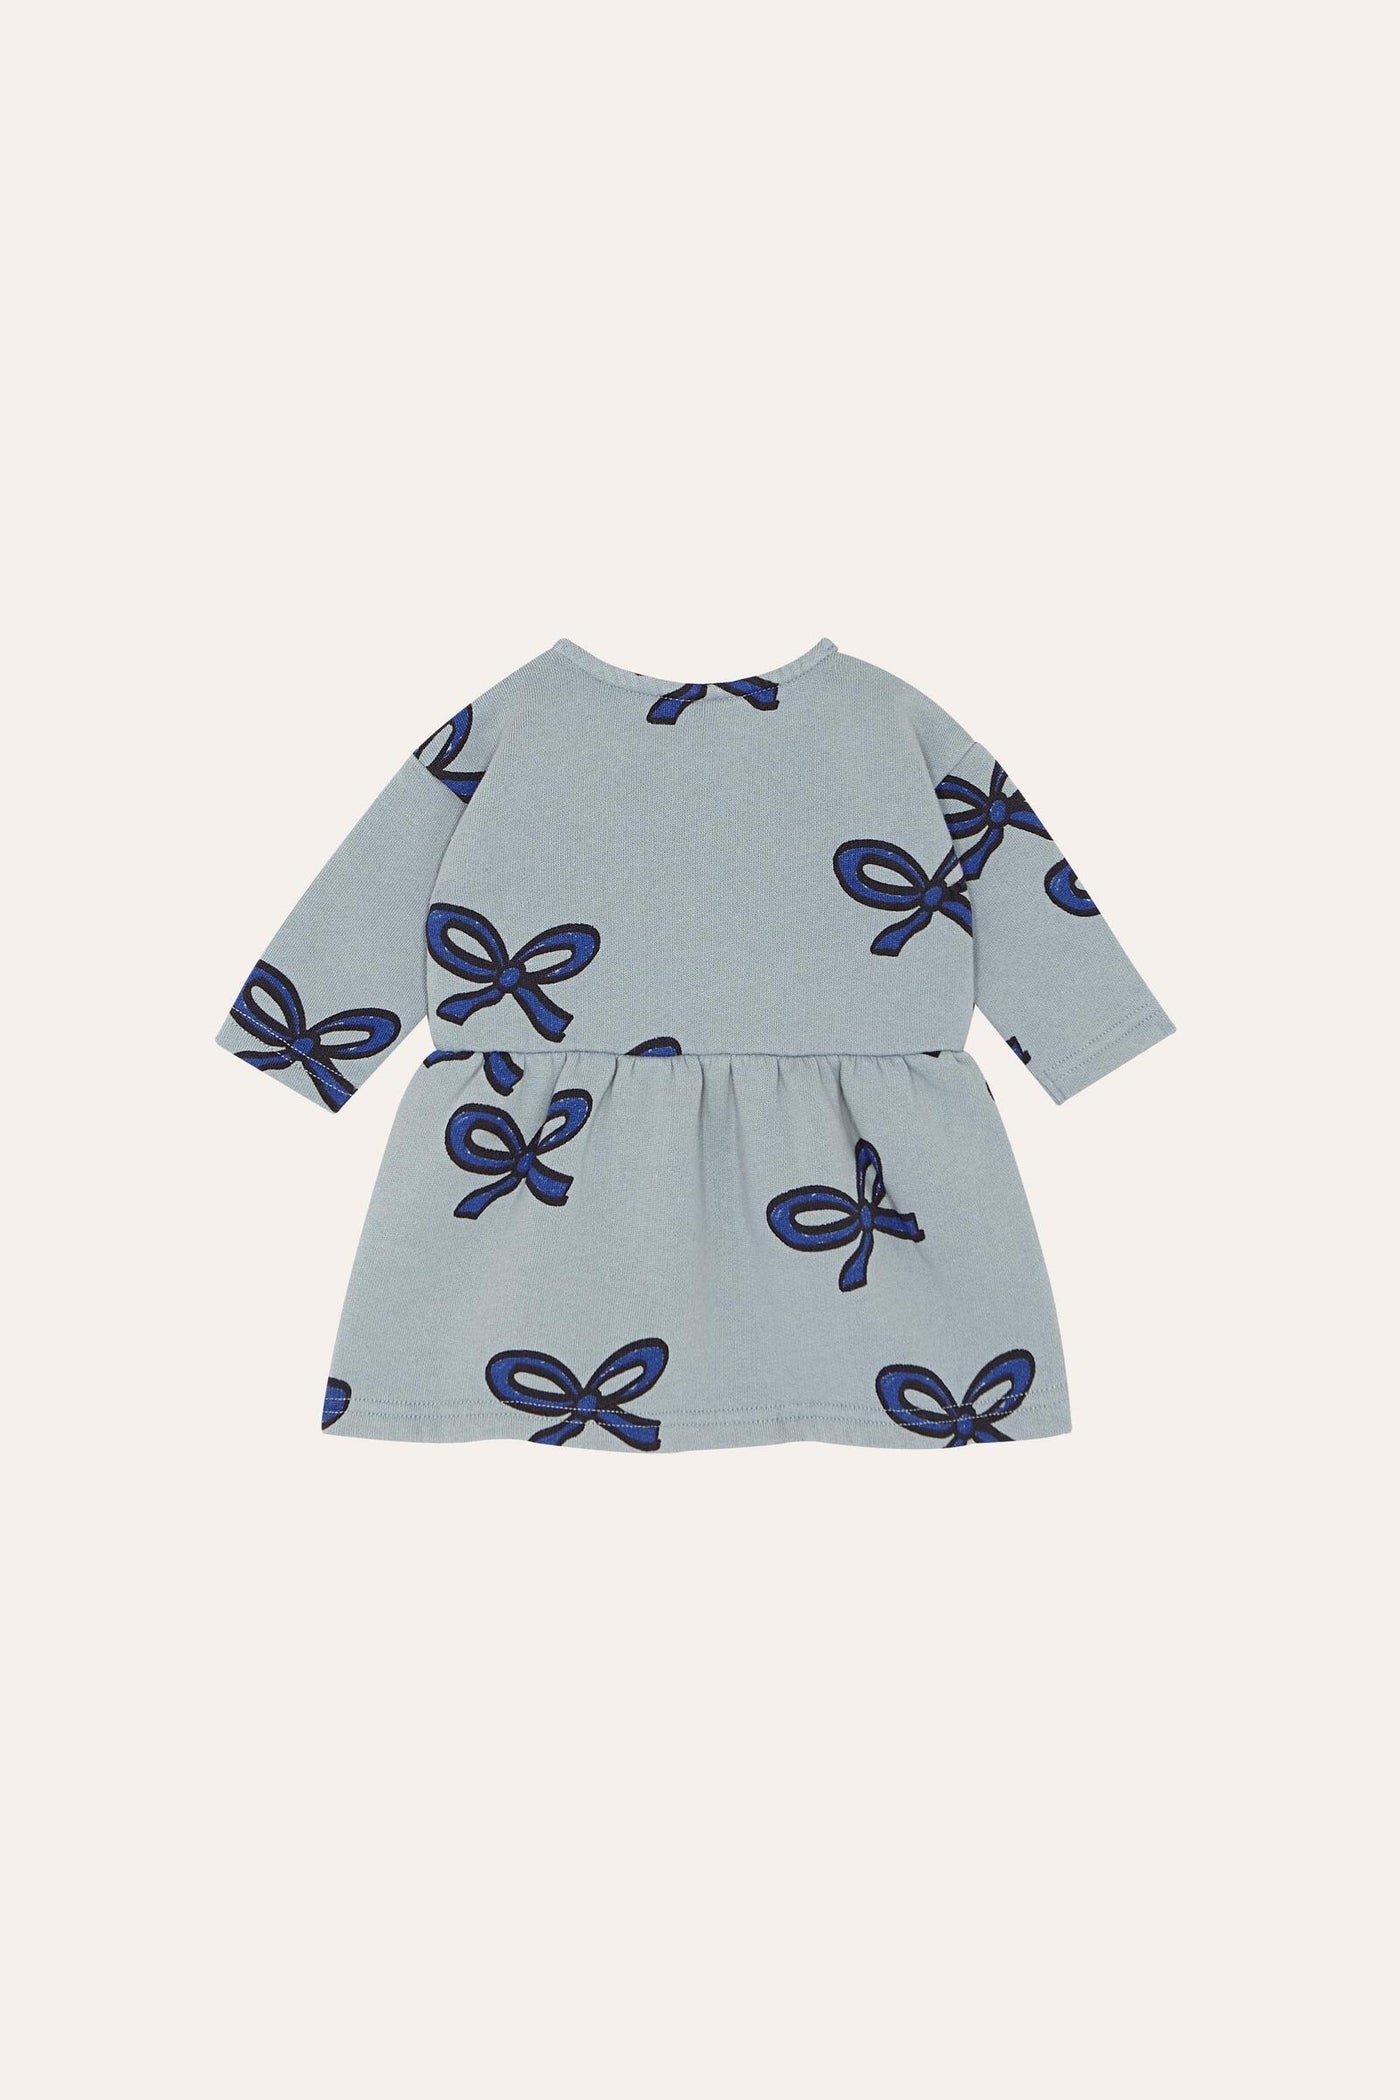 Blue Ribbons Baby Dress